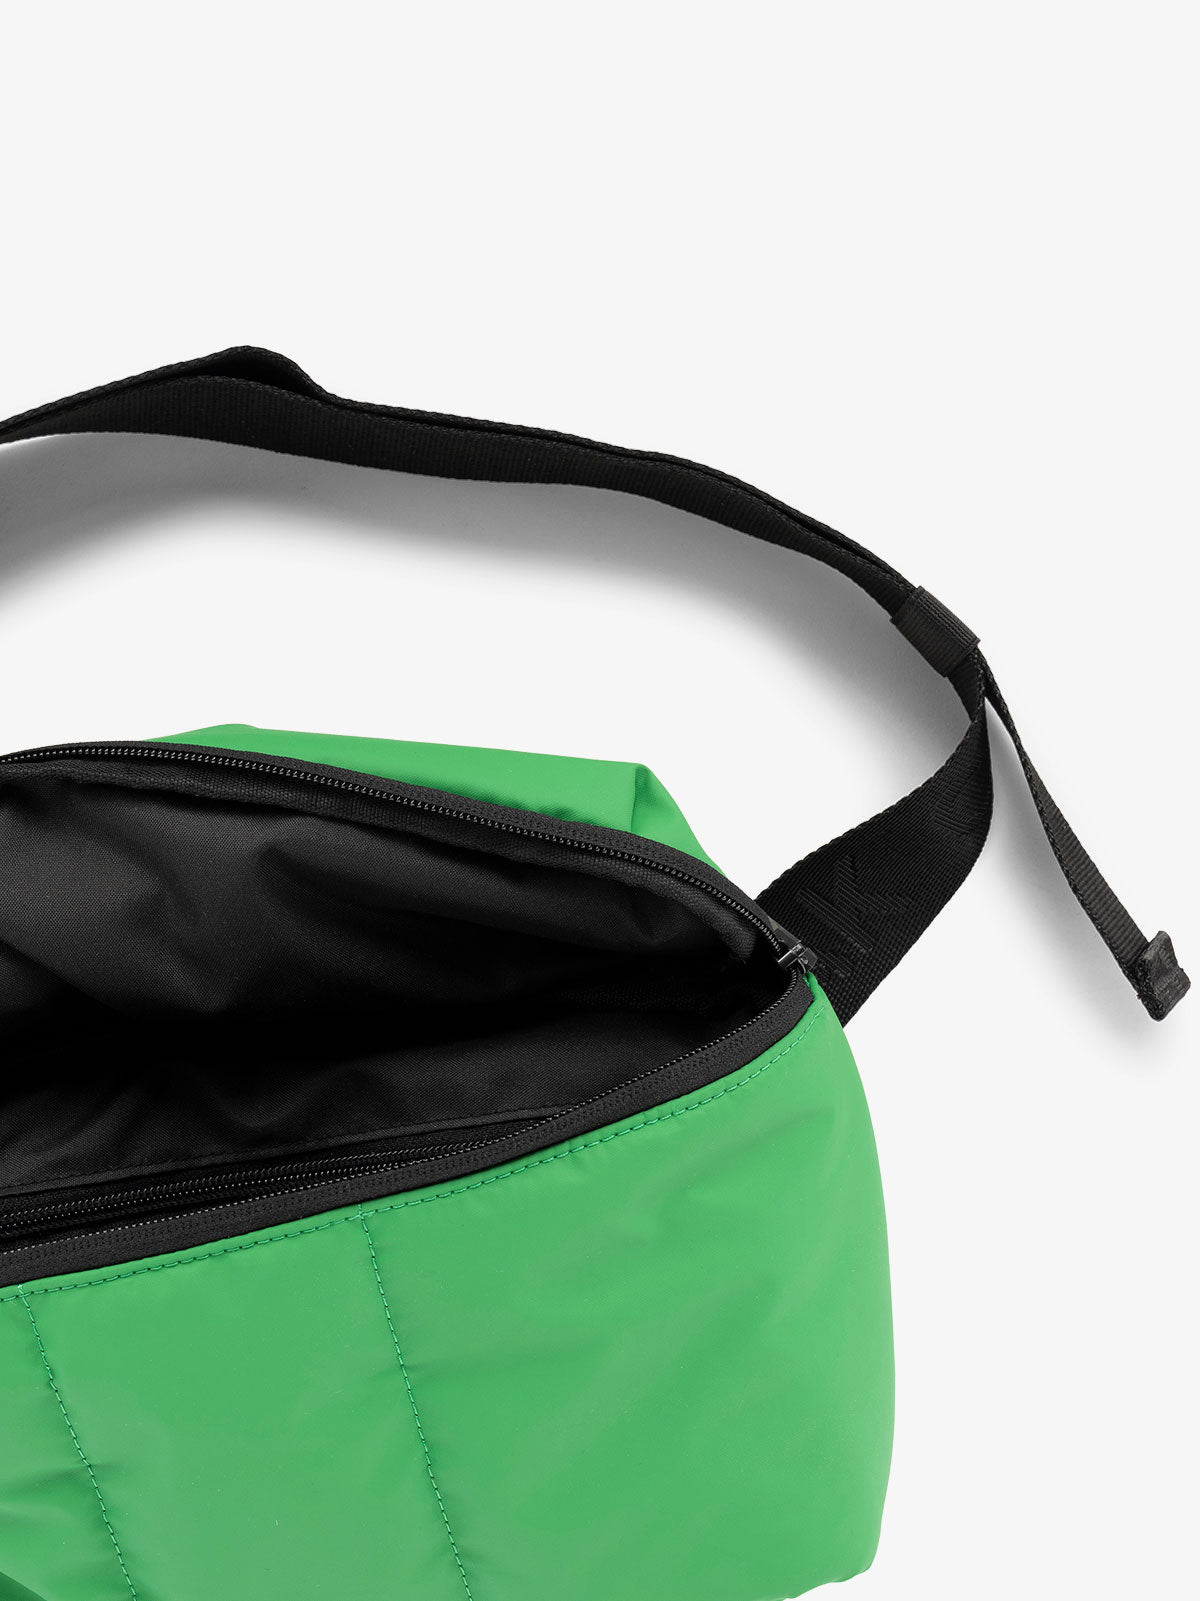 CALPAK Luka Belt Bag close up interior and strap in green